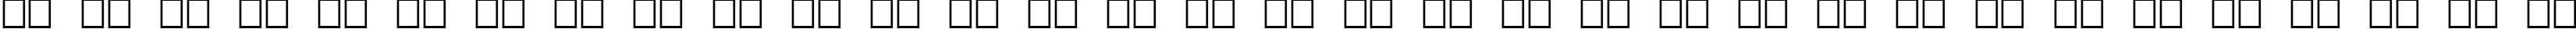 Пример написания русского алфавита шрифтом Peake-Shadow